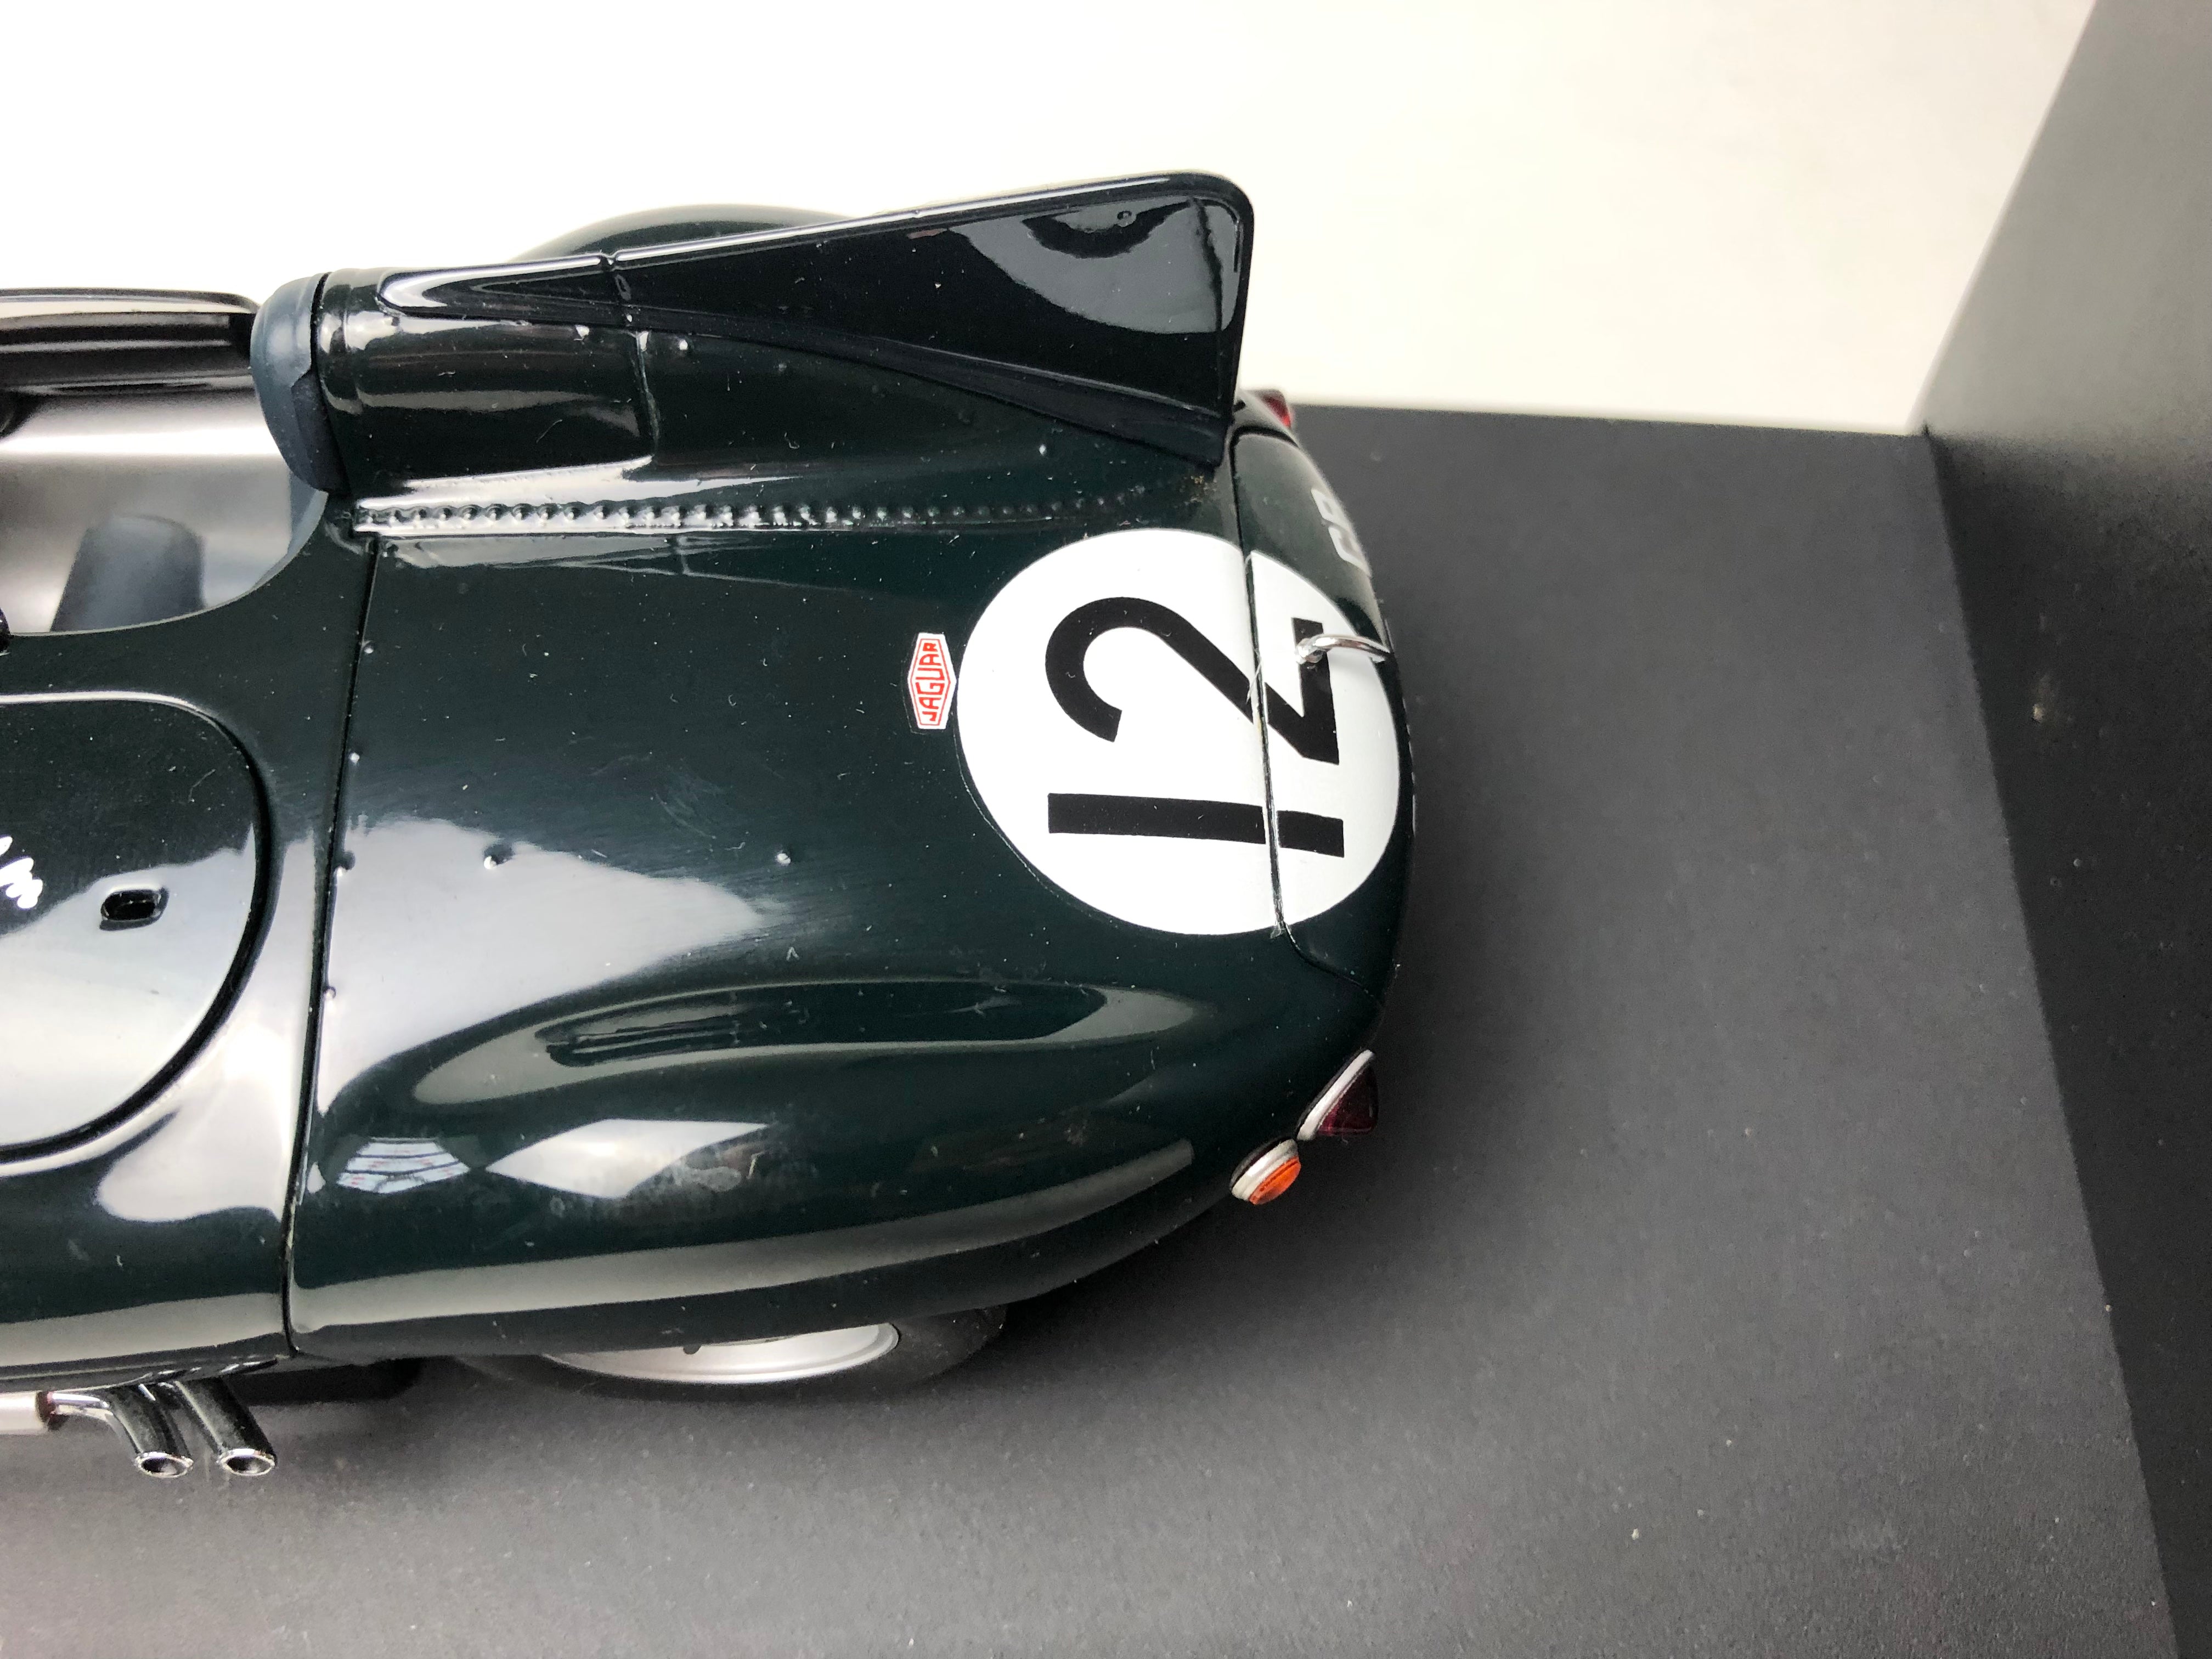 AutoArt 1:18 1954 Jaguar D Type #12 Signed Stirling Moss